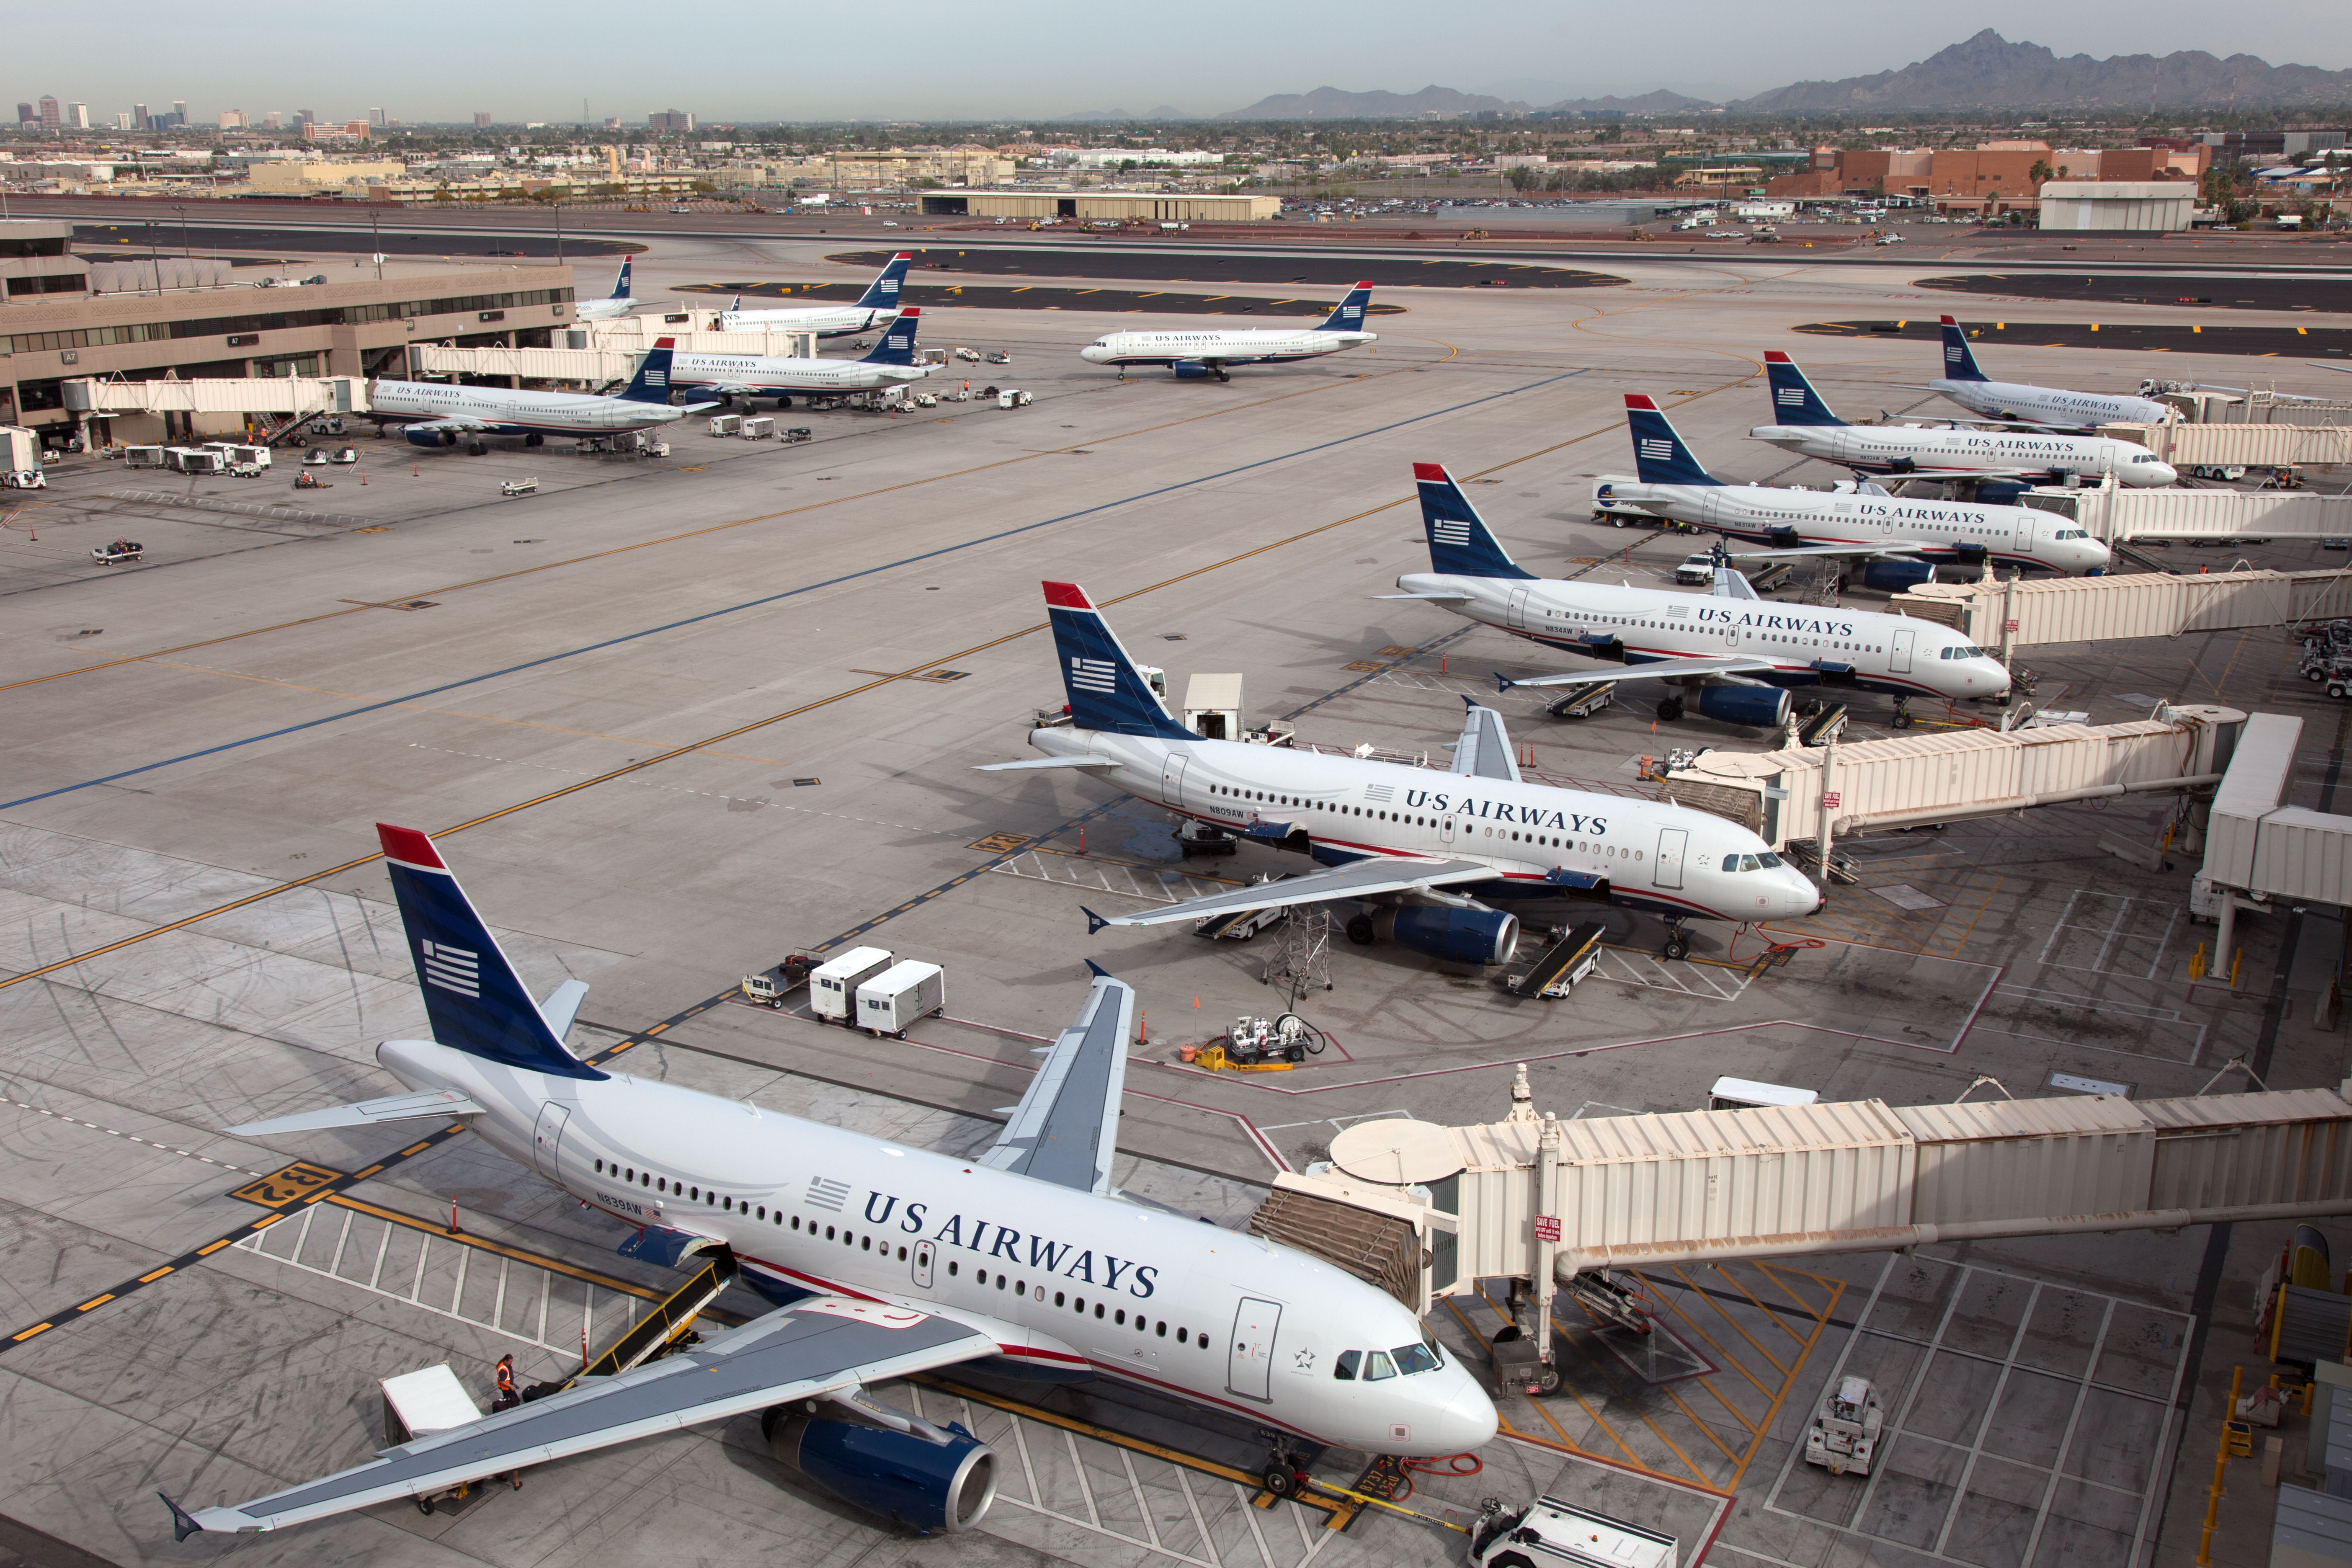 US Airways aircraft on the ground at Phoenix (PHX)